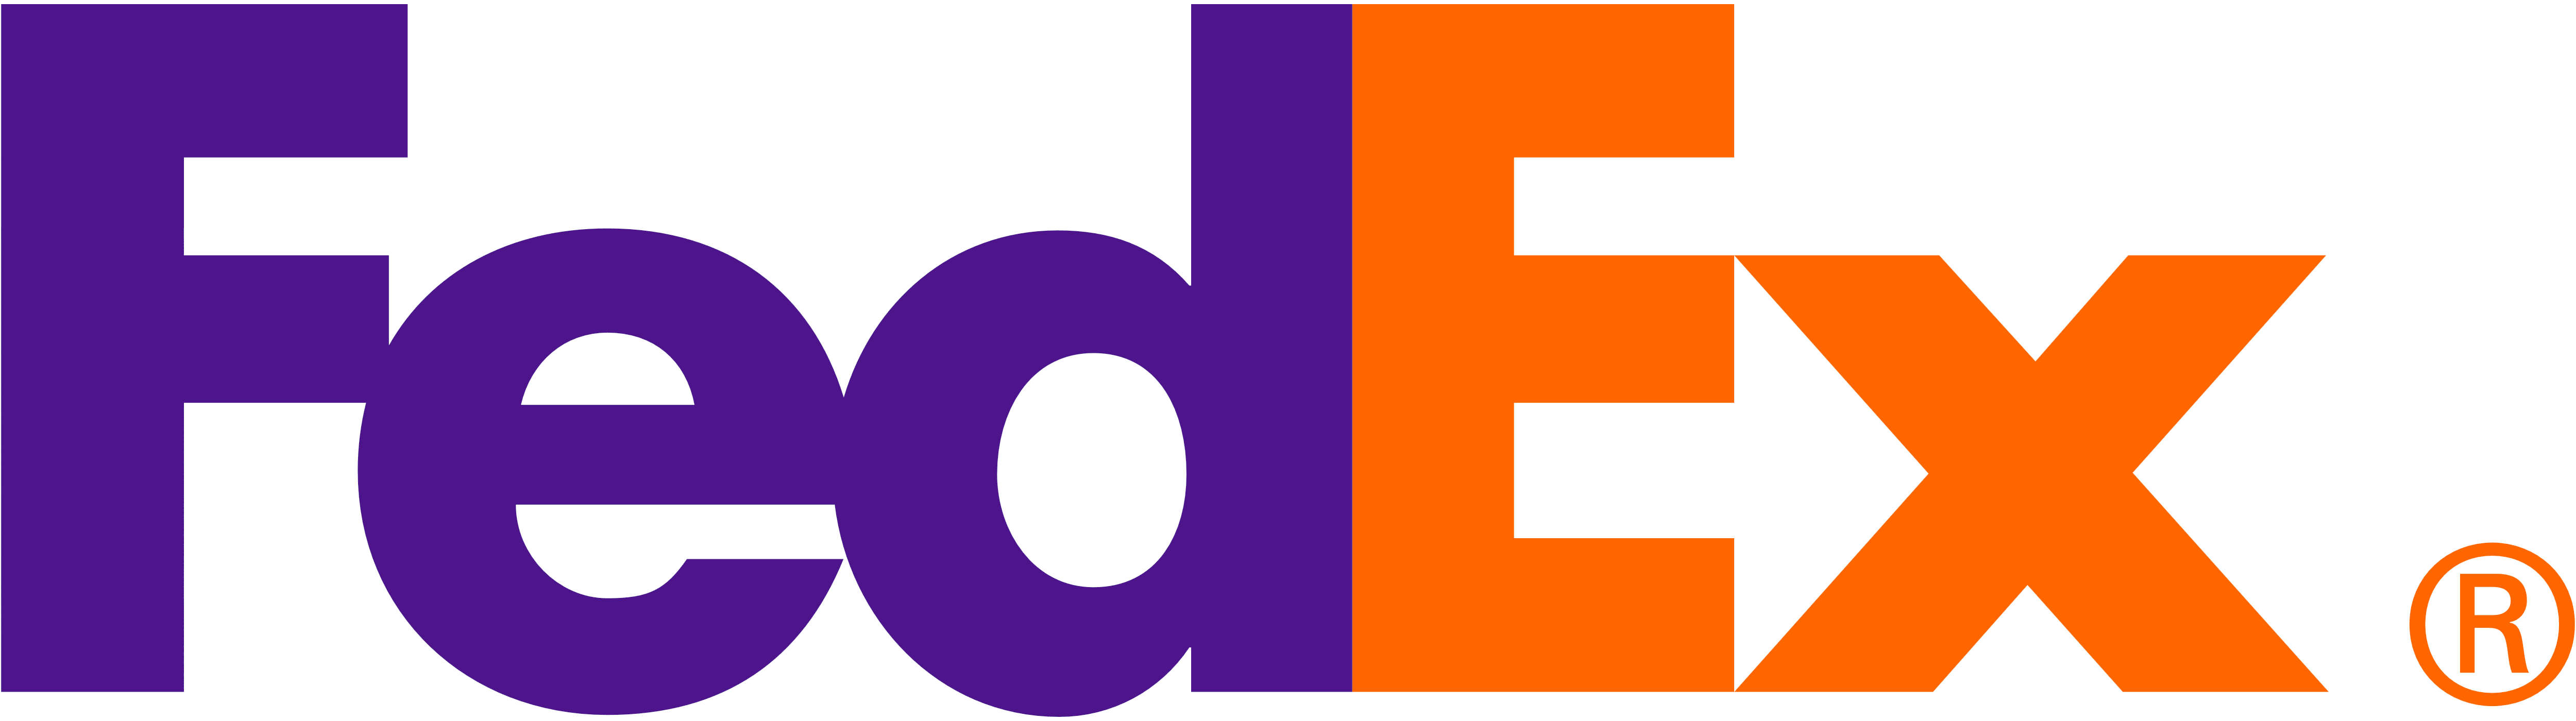 FedEx_logo_example orange-purple